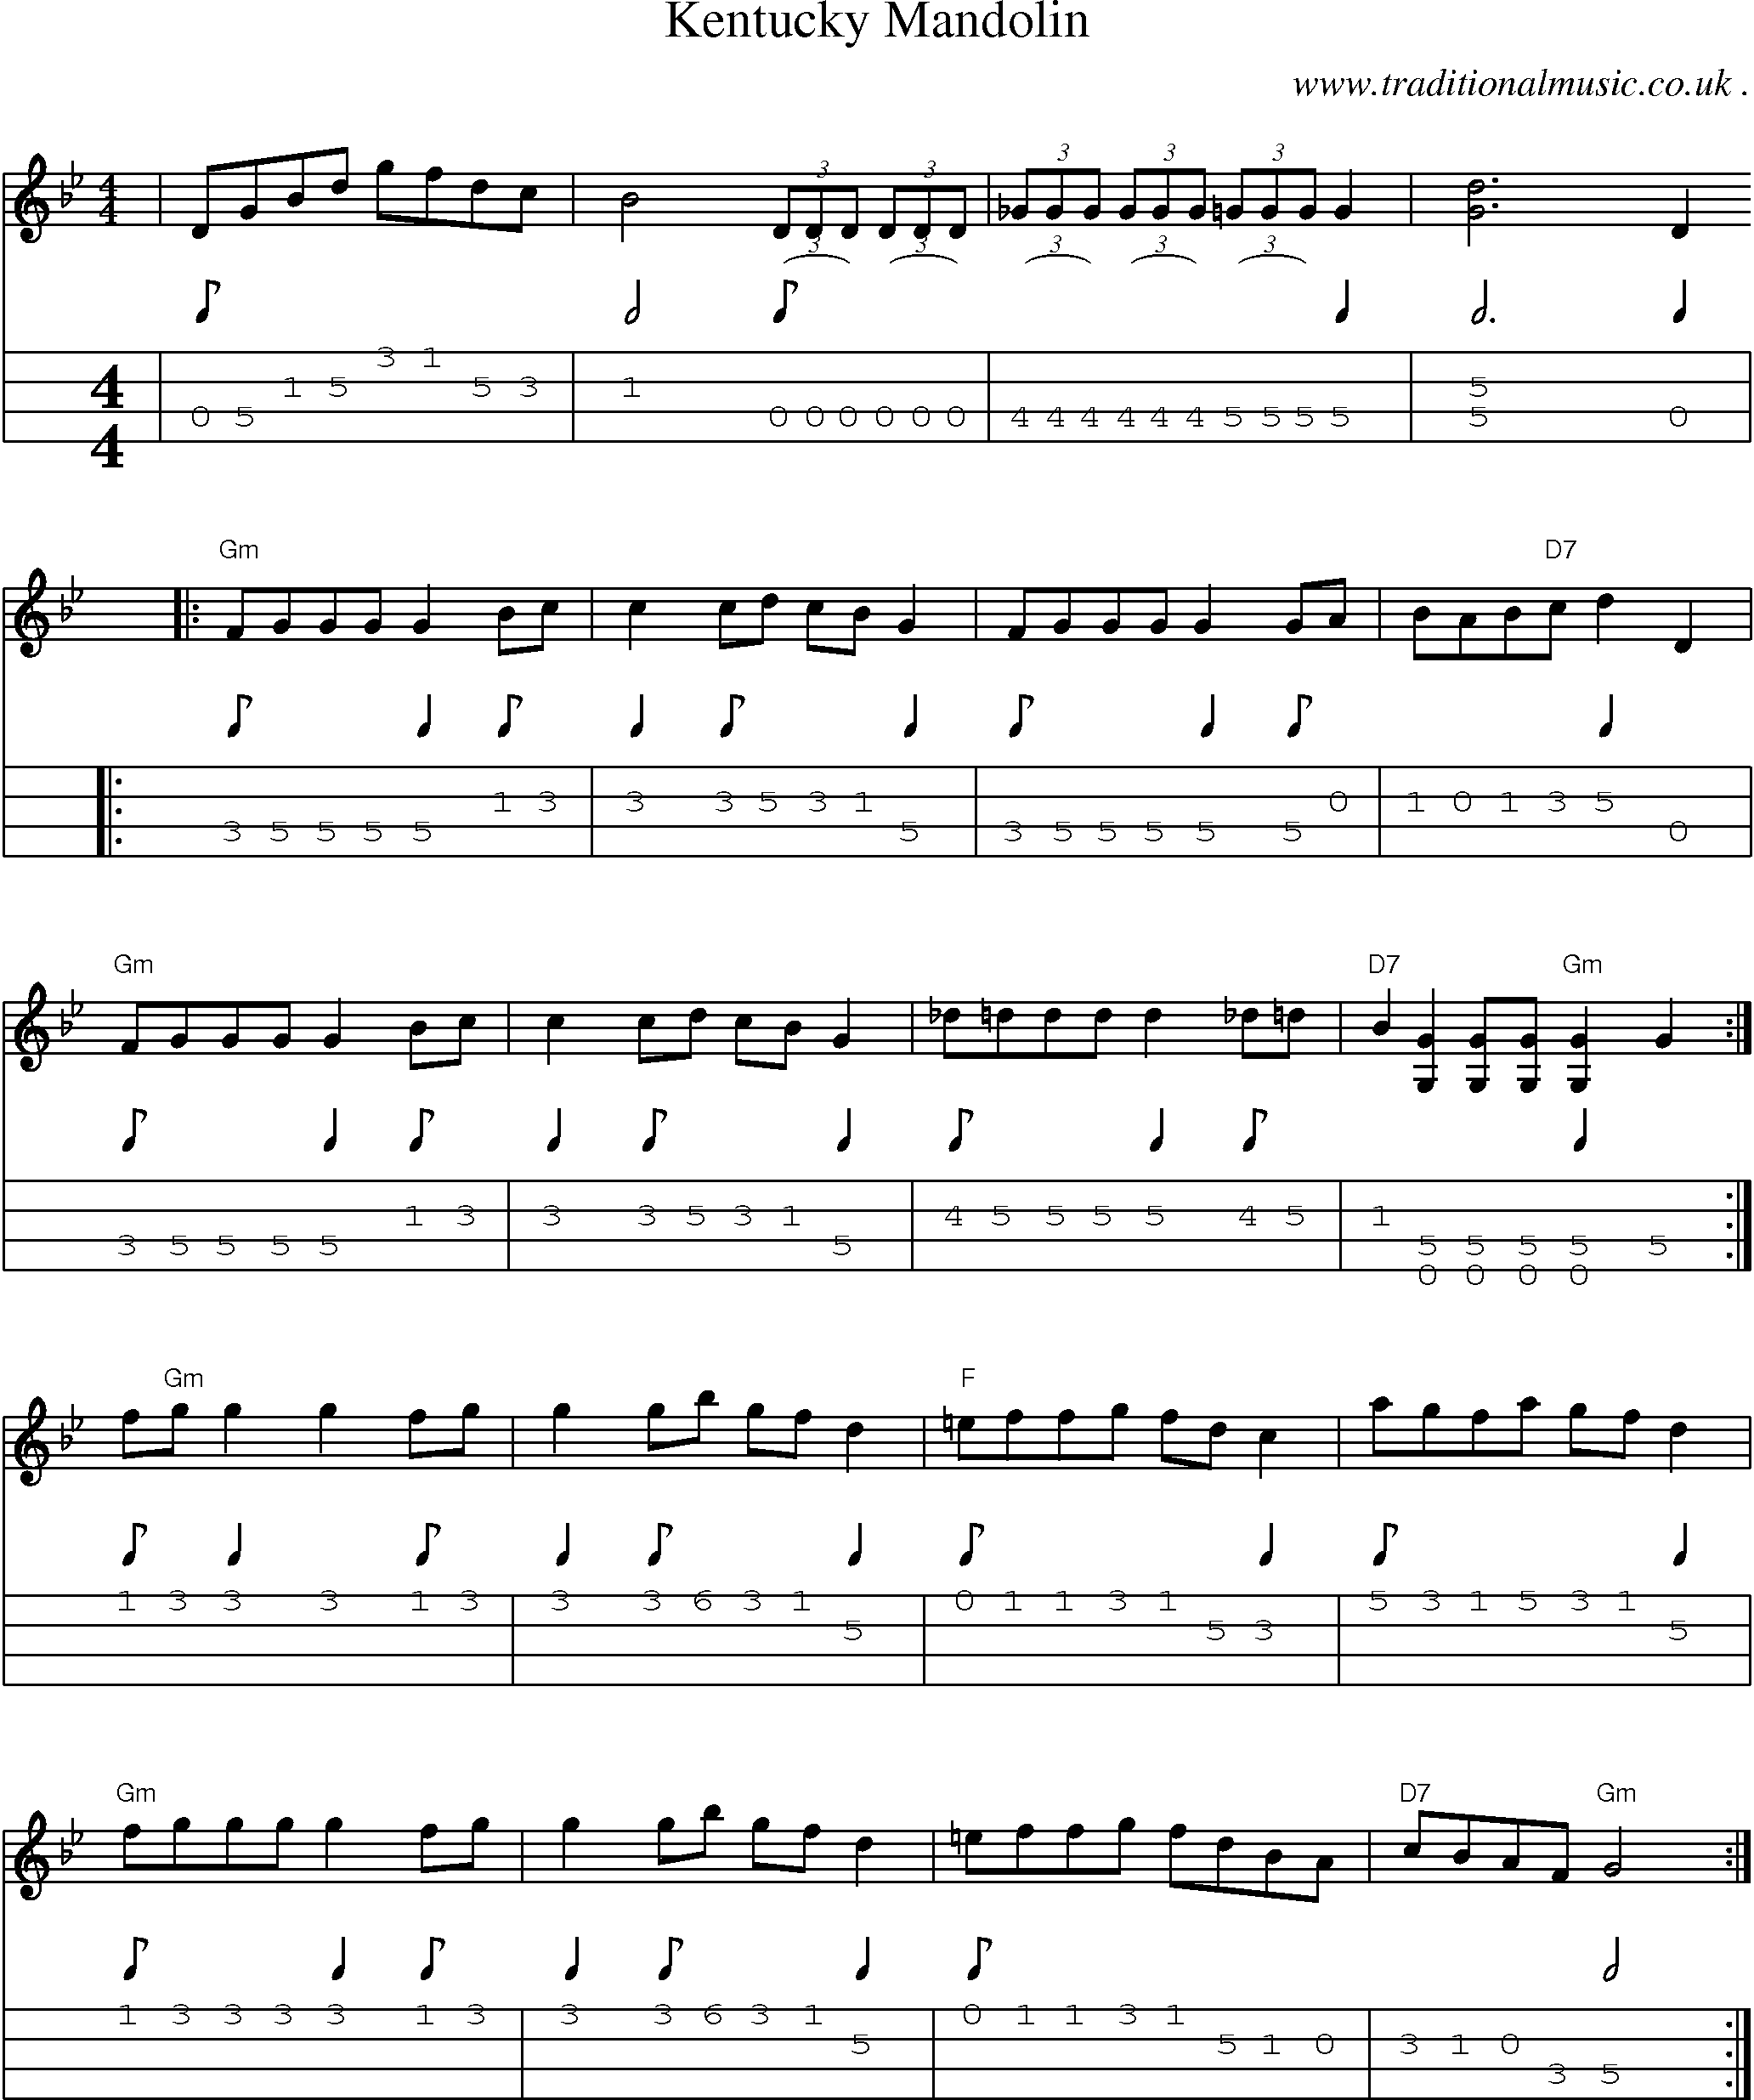 Music Score and Mandolin Tabs for Kentucky Mandolin